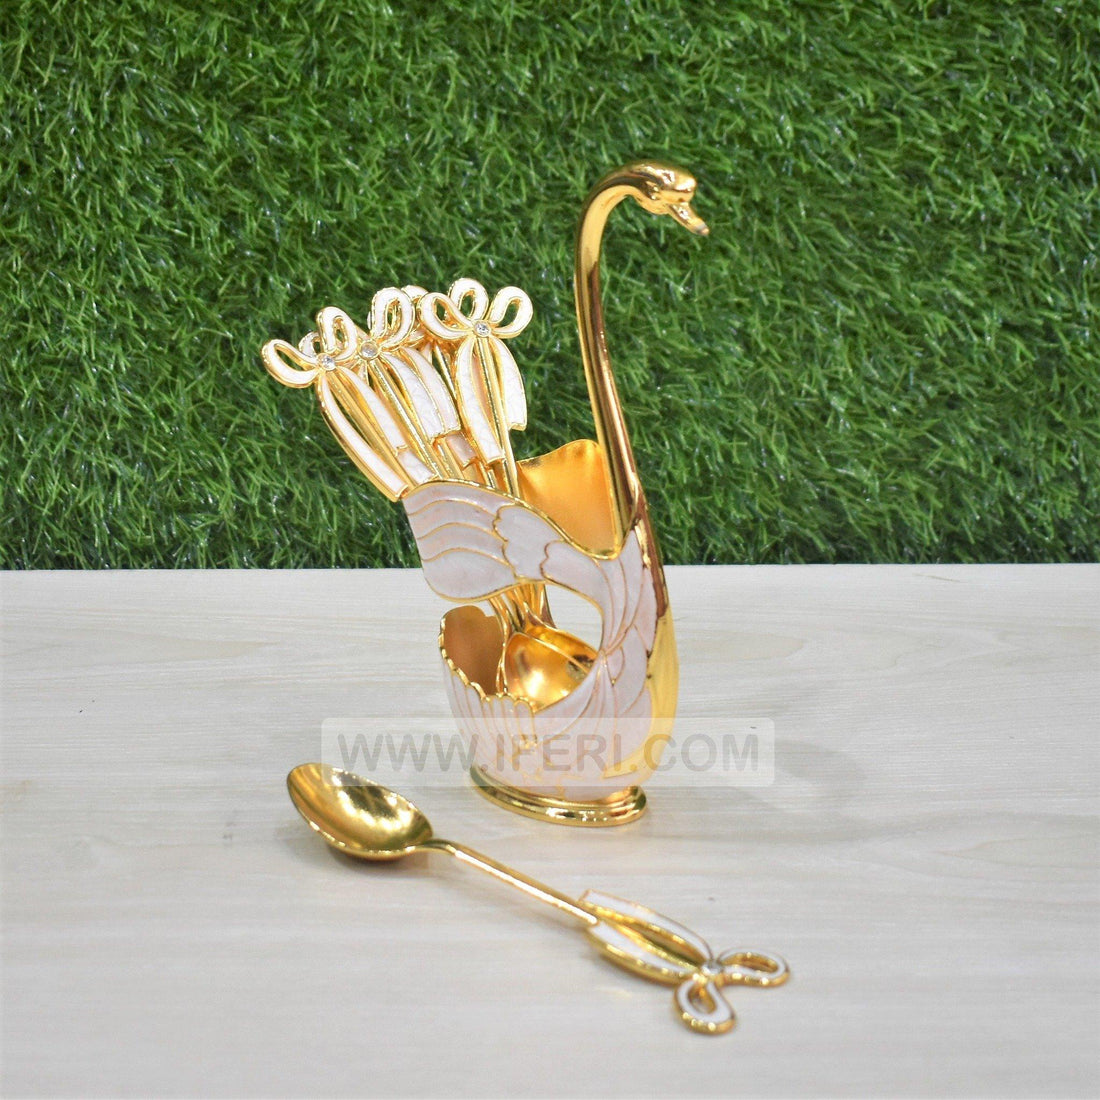 Swan Decorative Spoon Set RR6785 - Price in BD at iferi.com